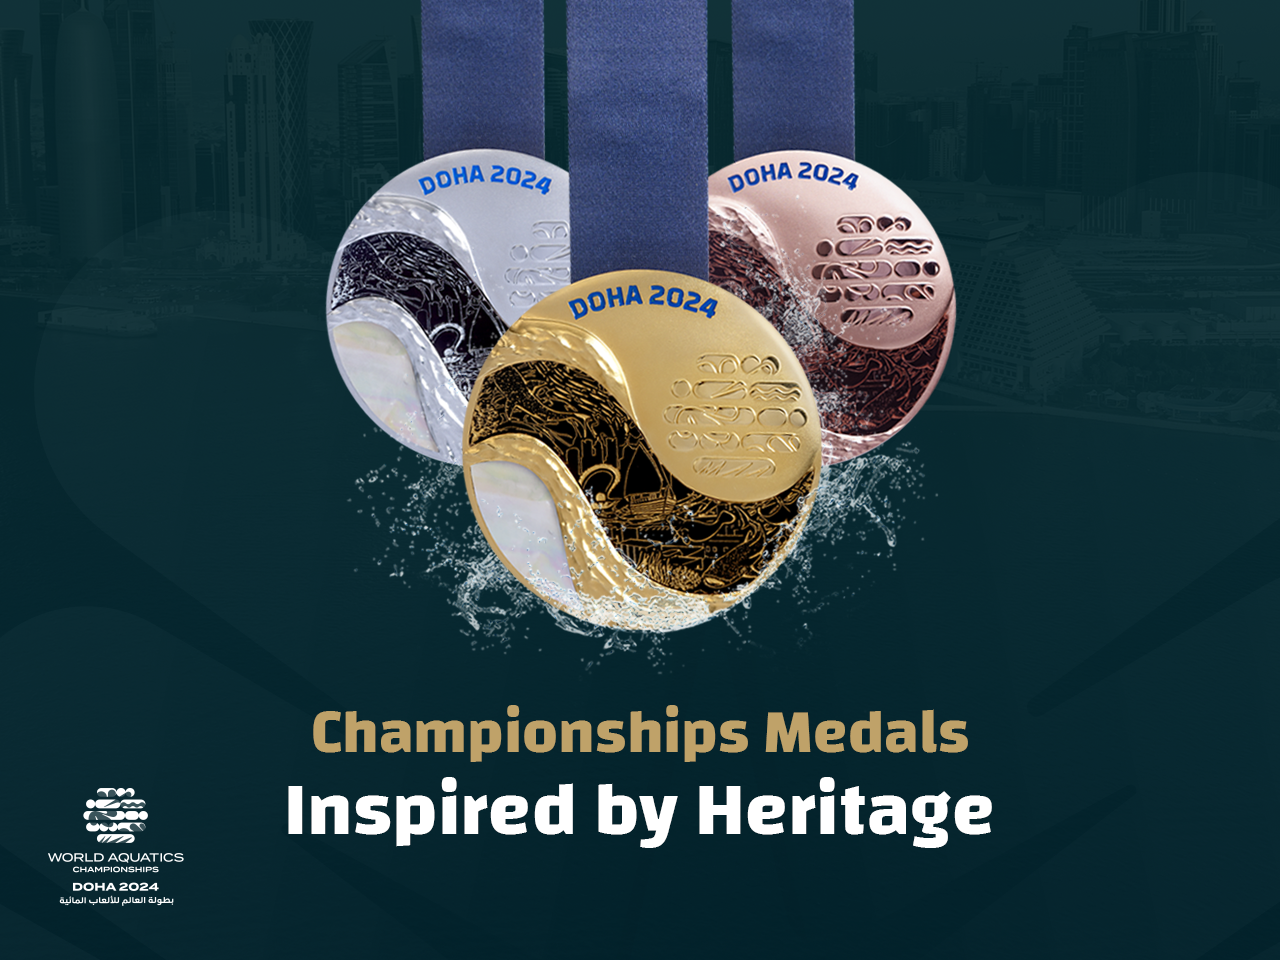 World Aquatics Championships 2024 in Doha and its dazzling new medals